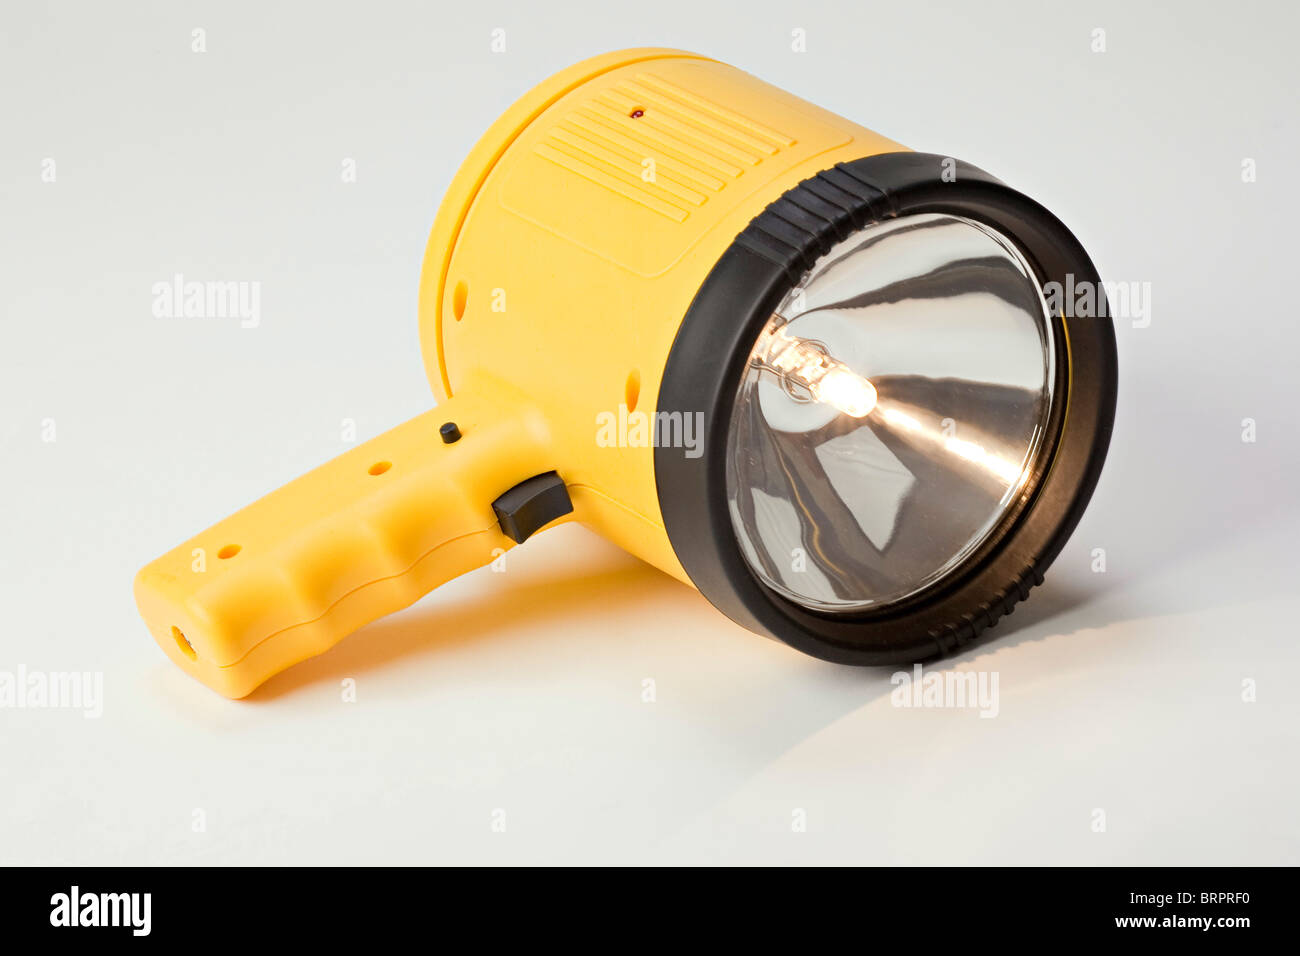 halogen torch / flashlight Stock Photo